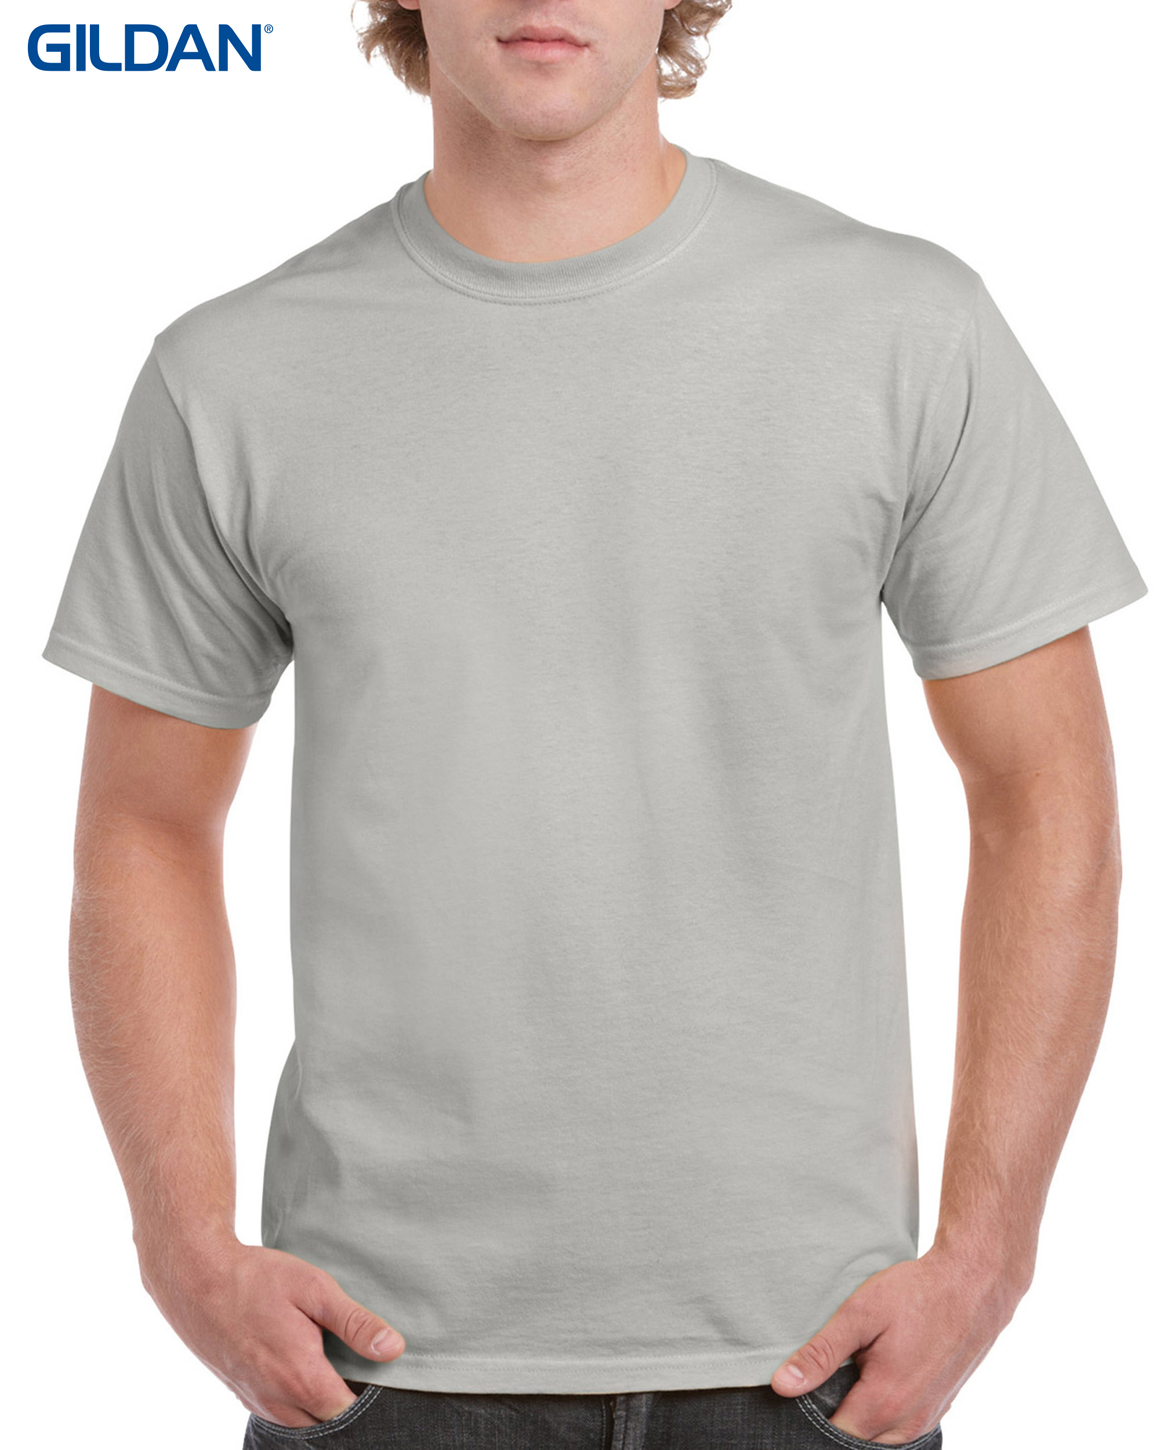 Download T Shirts : GILDAN MENS MIDWEIGHT 180GM 100% COTTON CN T ...